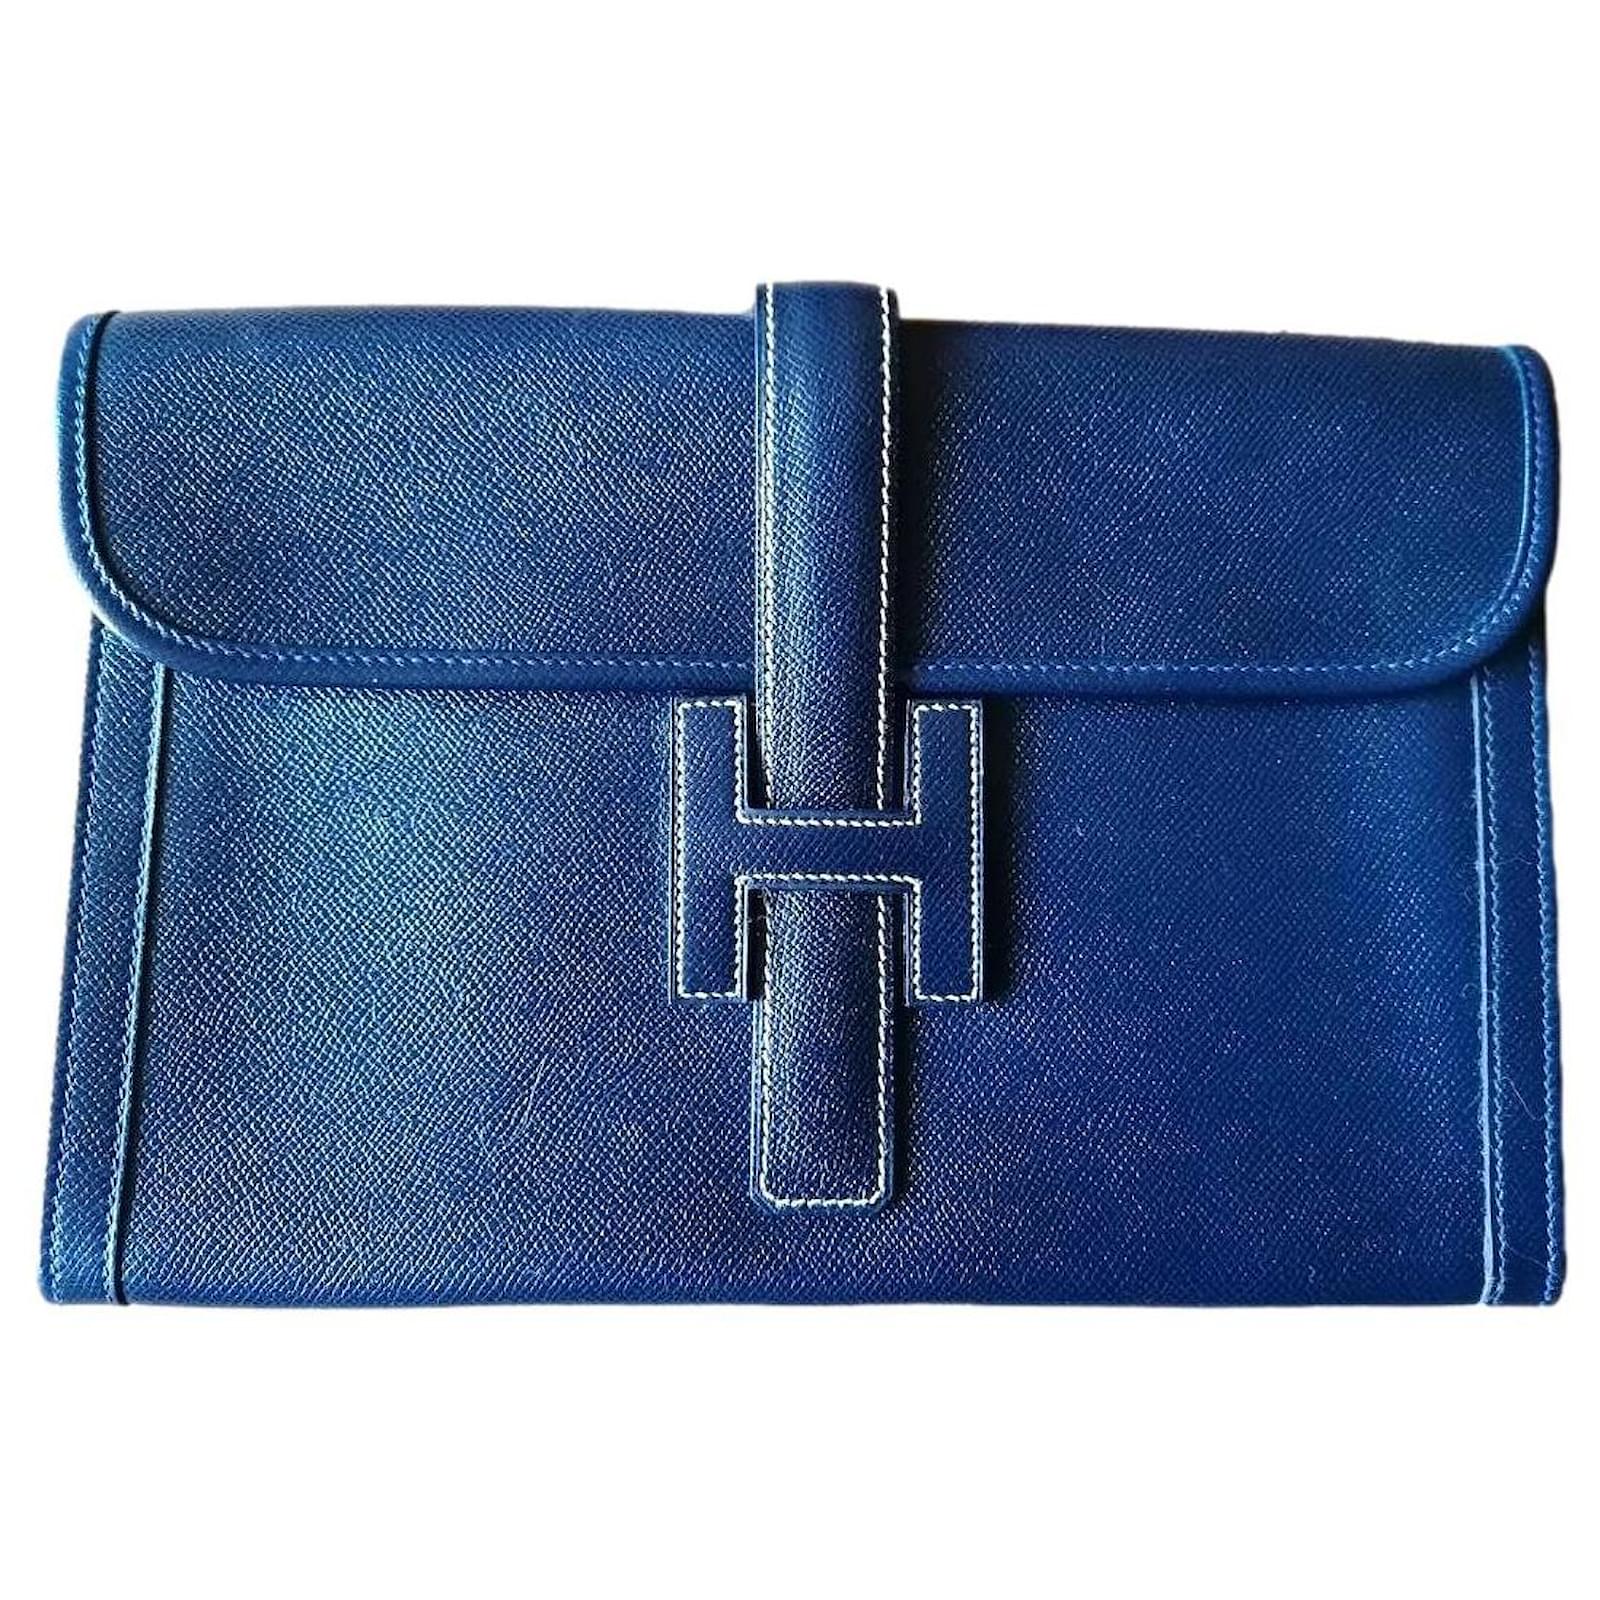 Hermes Beige Swift Leather Jige 29 Clutch Bag